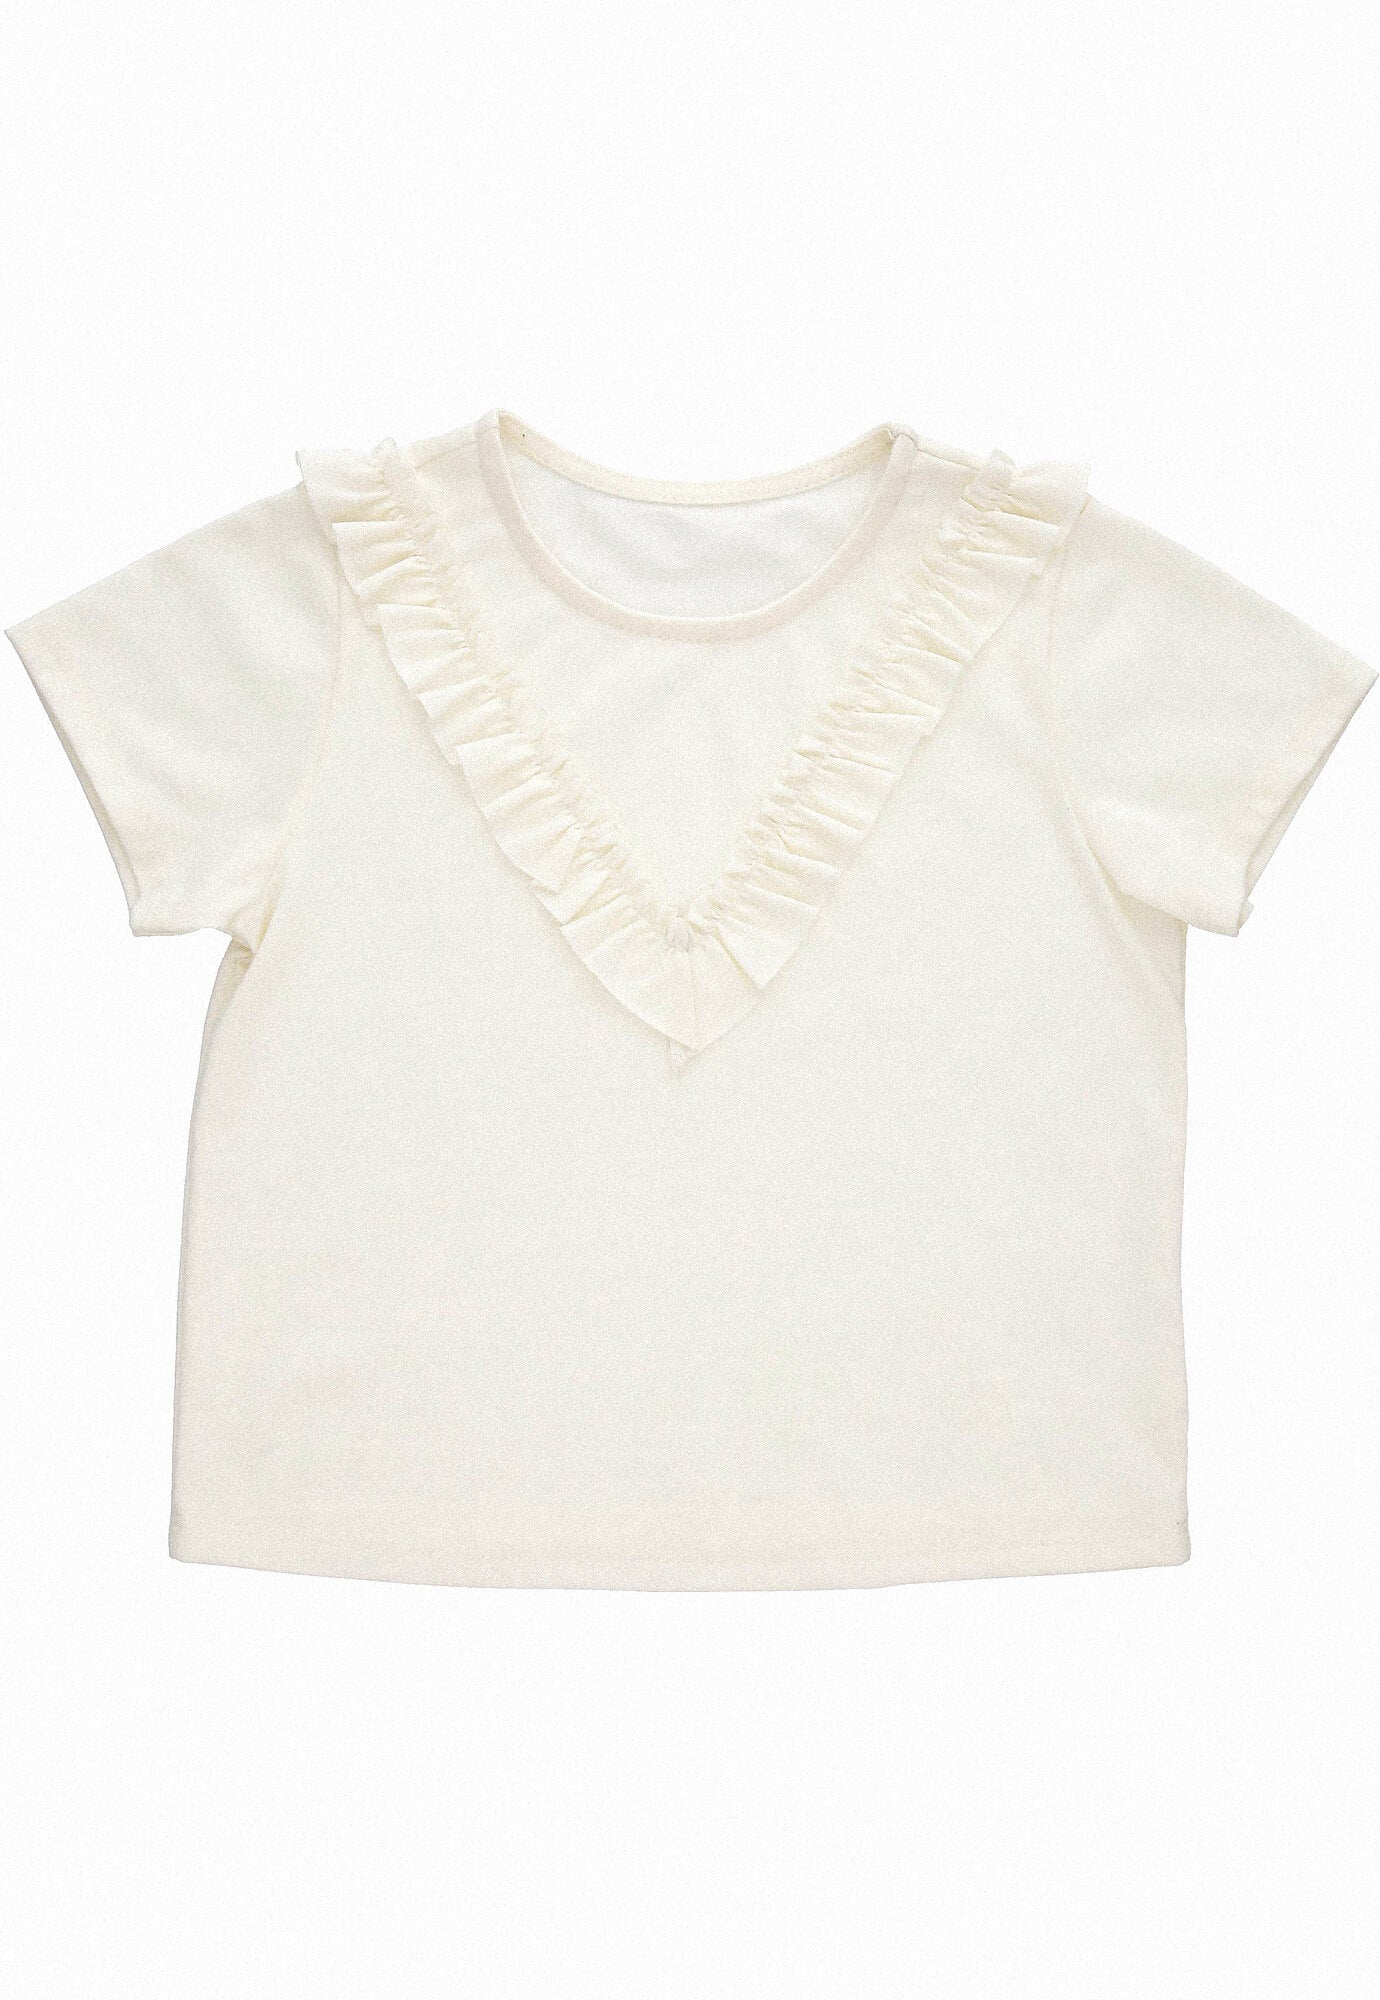 Camiseta ivory fondo entero, bolero sobrepuesto y manga corta para bebé niña